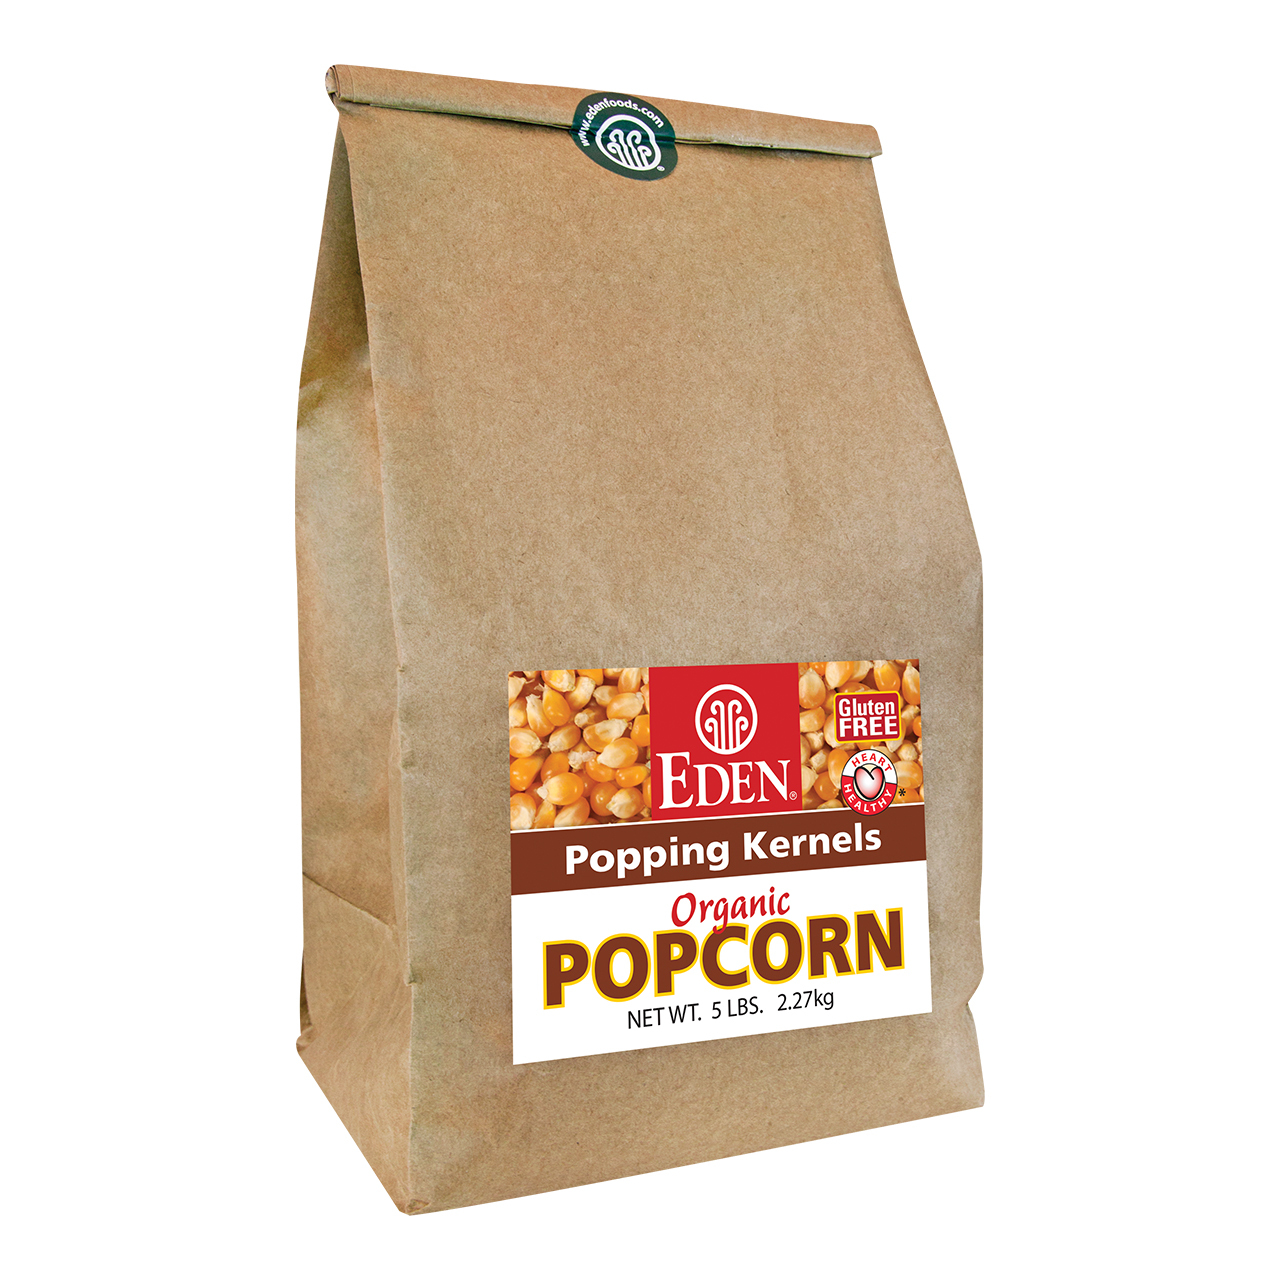 EF Popcorn